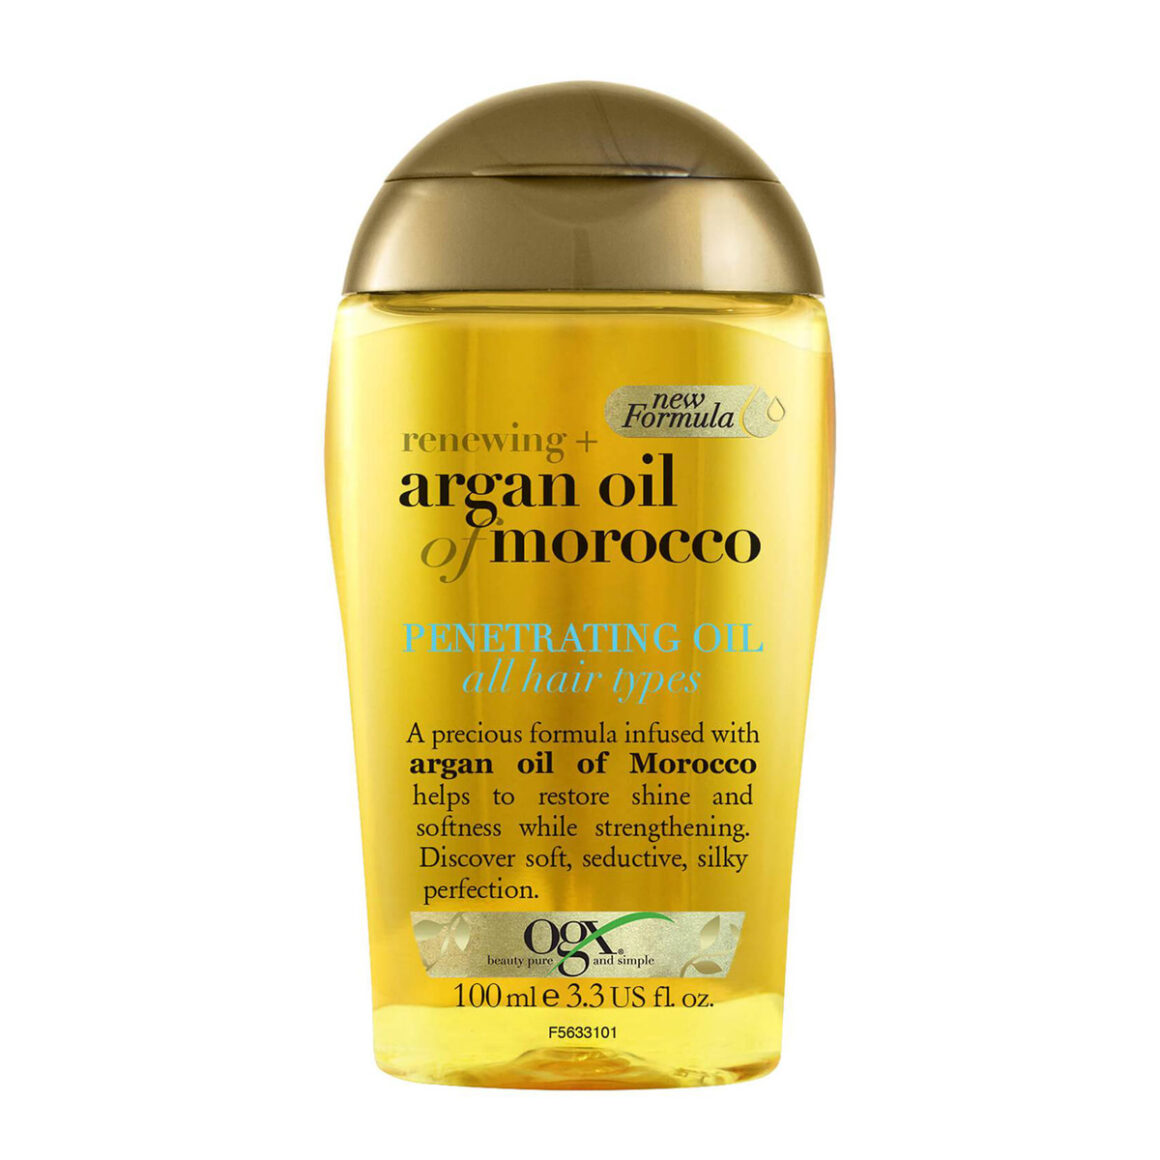 Argan Oil of Morocco by OGX